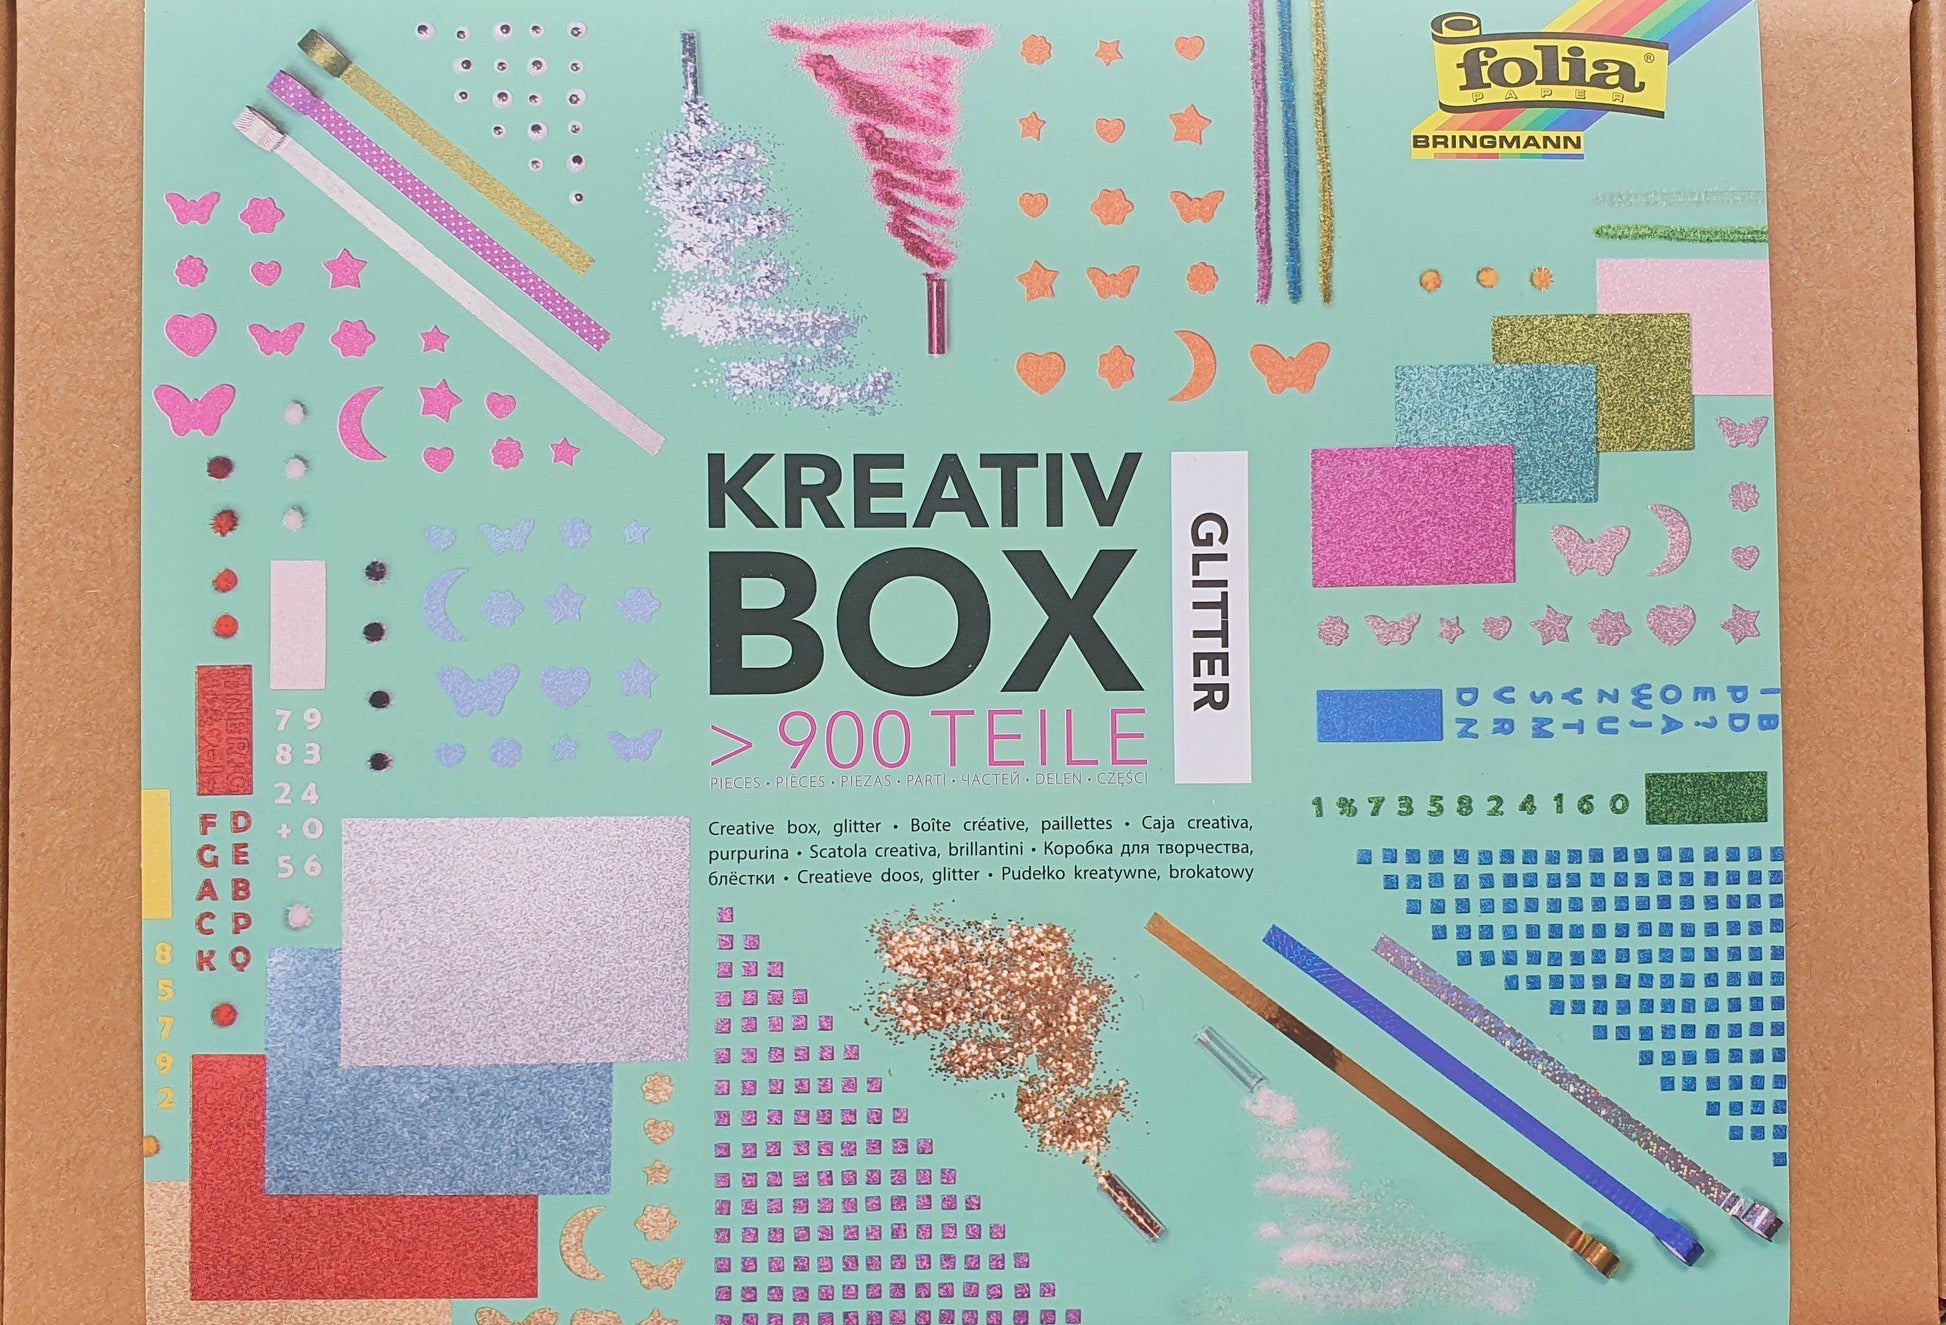 Kreativ Box Like New, Age 7+ The Gift Box Project  (7002487455929)